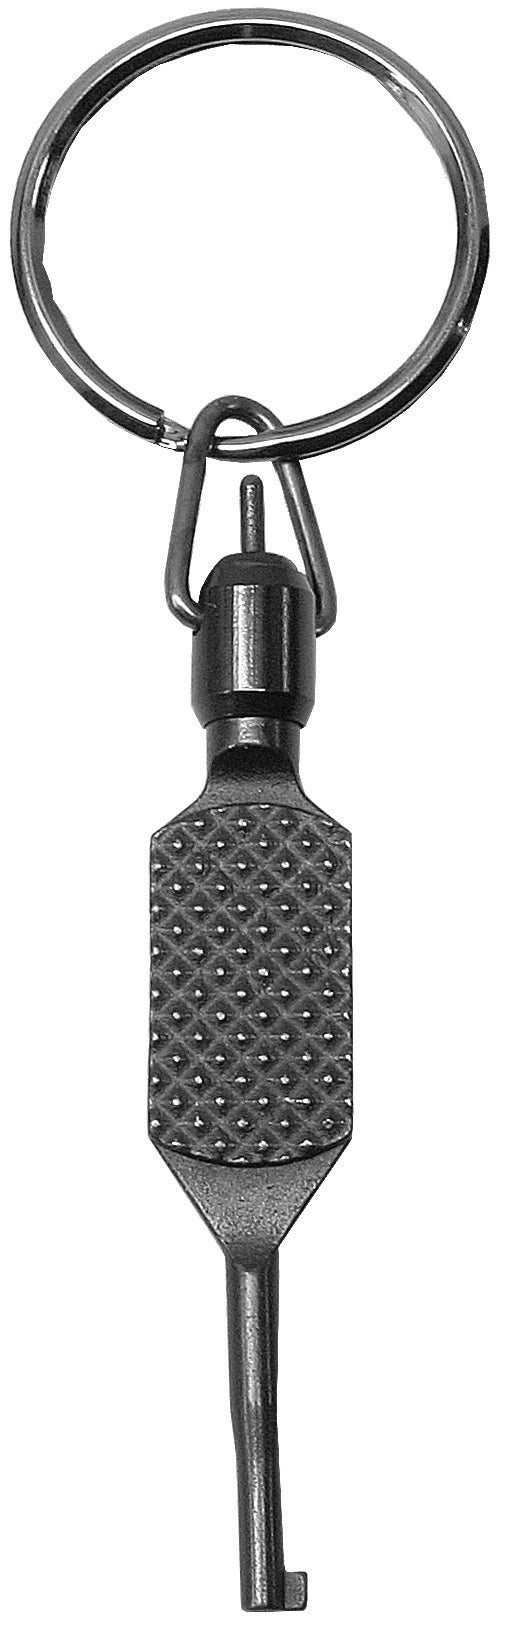 Stainless Steel Flat Knurl Handcuff Key